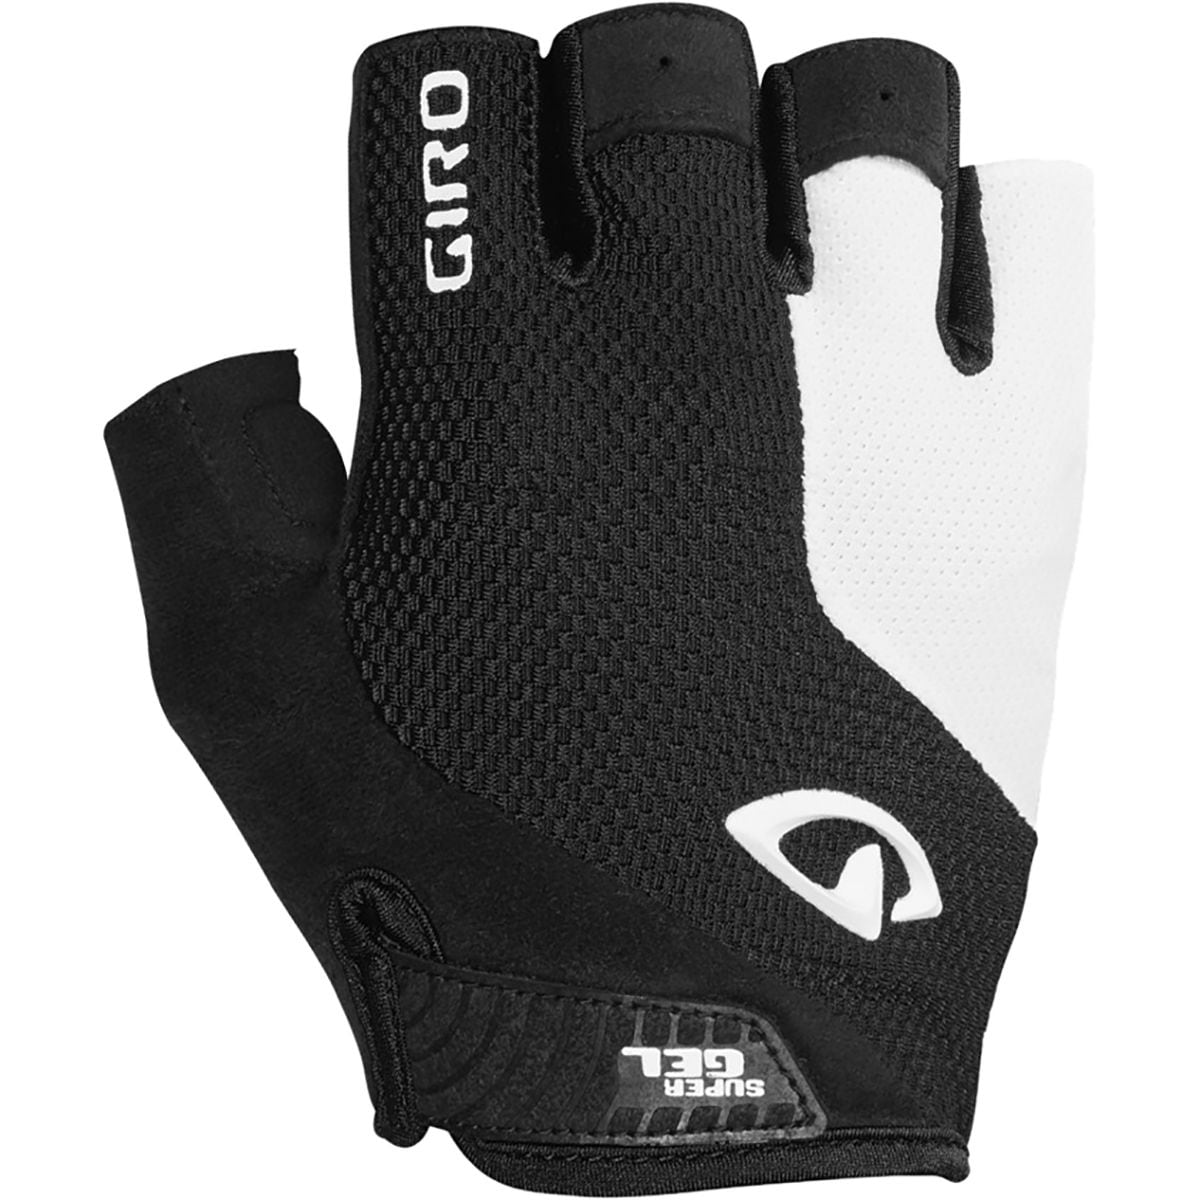 Giro Strate Dure Supergel Glove - Men's